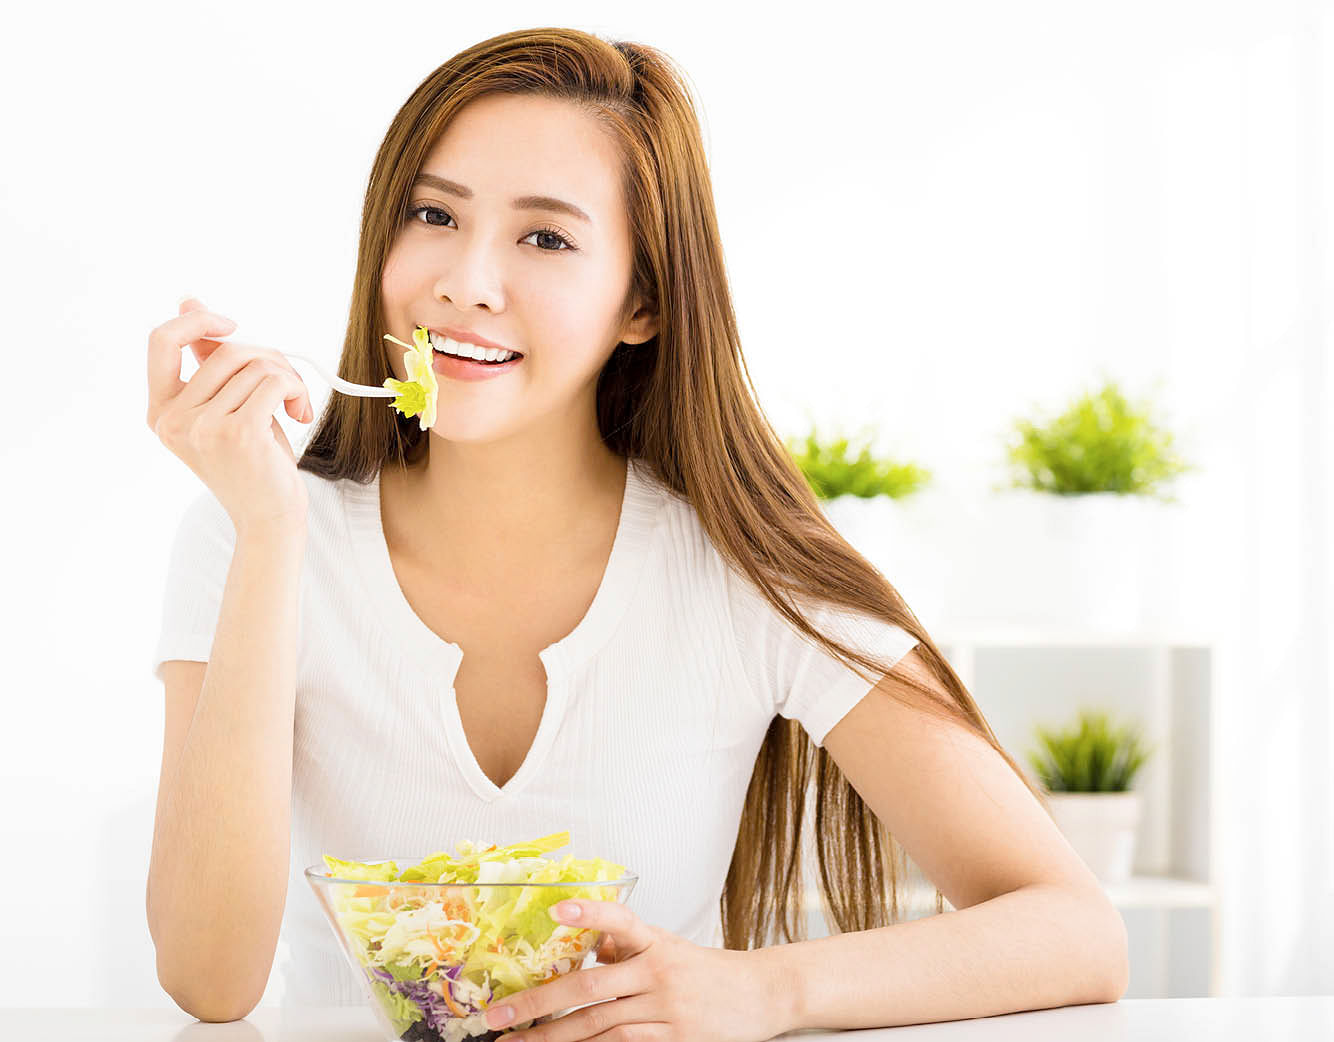 Asian girl posing with food